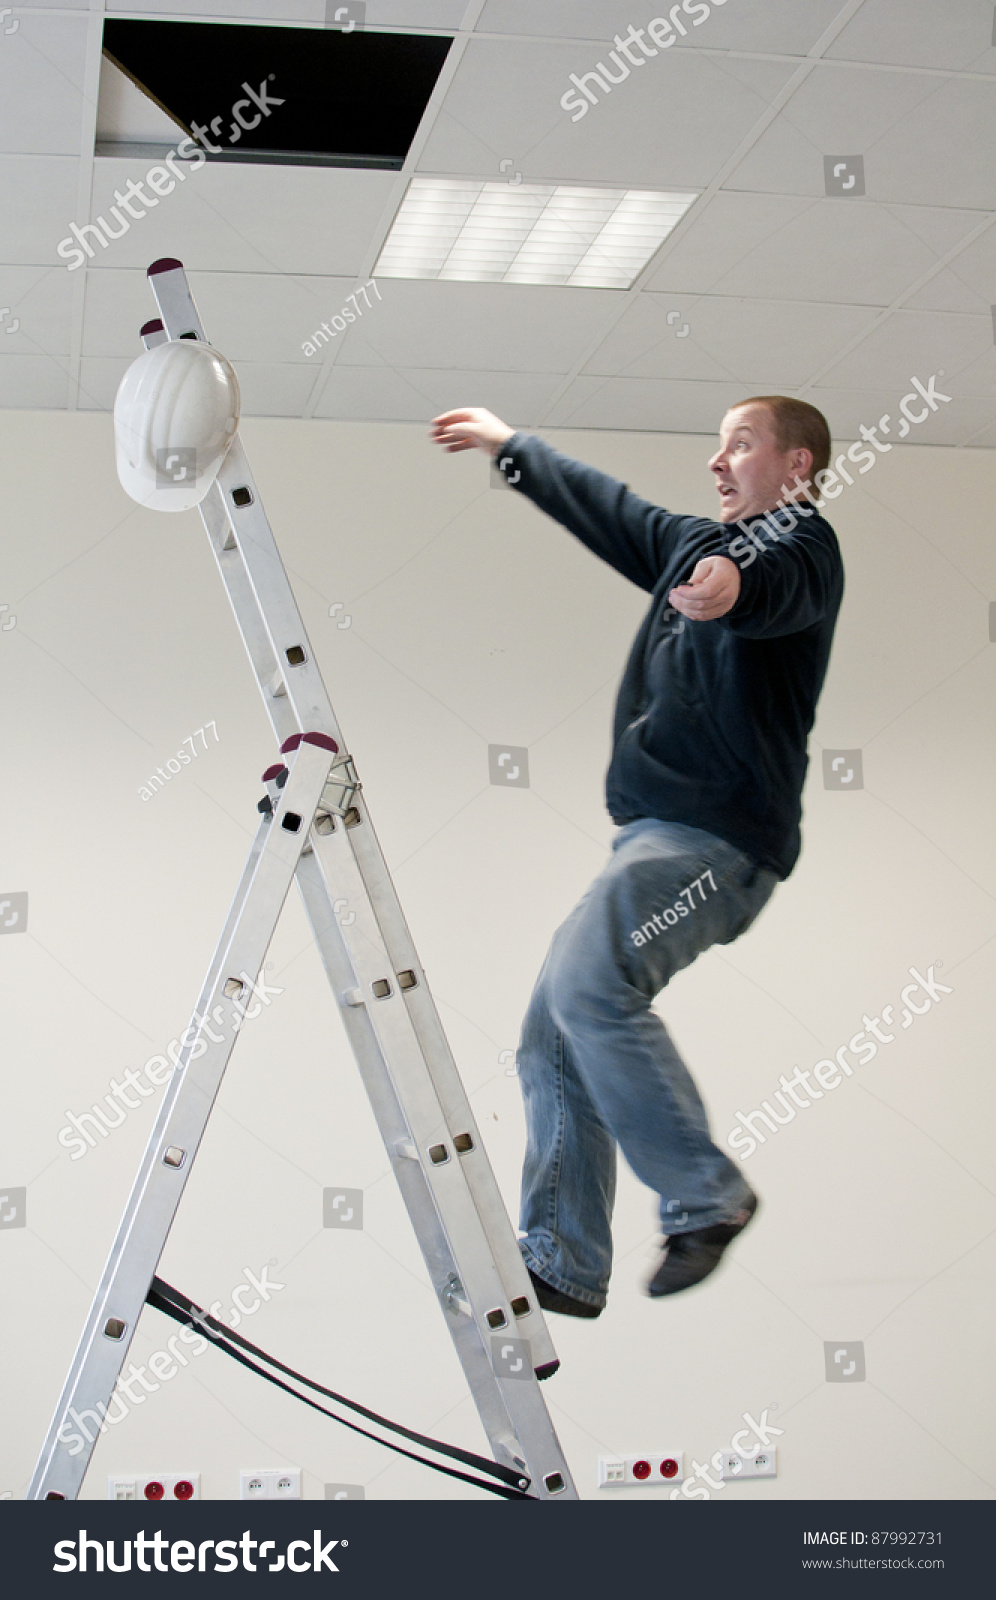 clipart man falling off ladder - photo #22